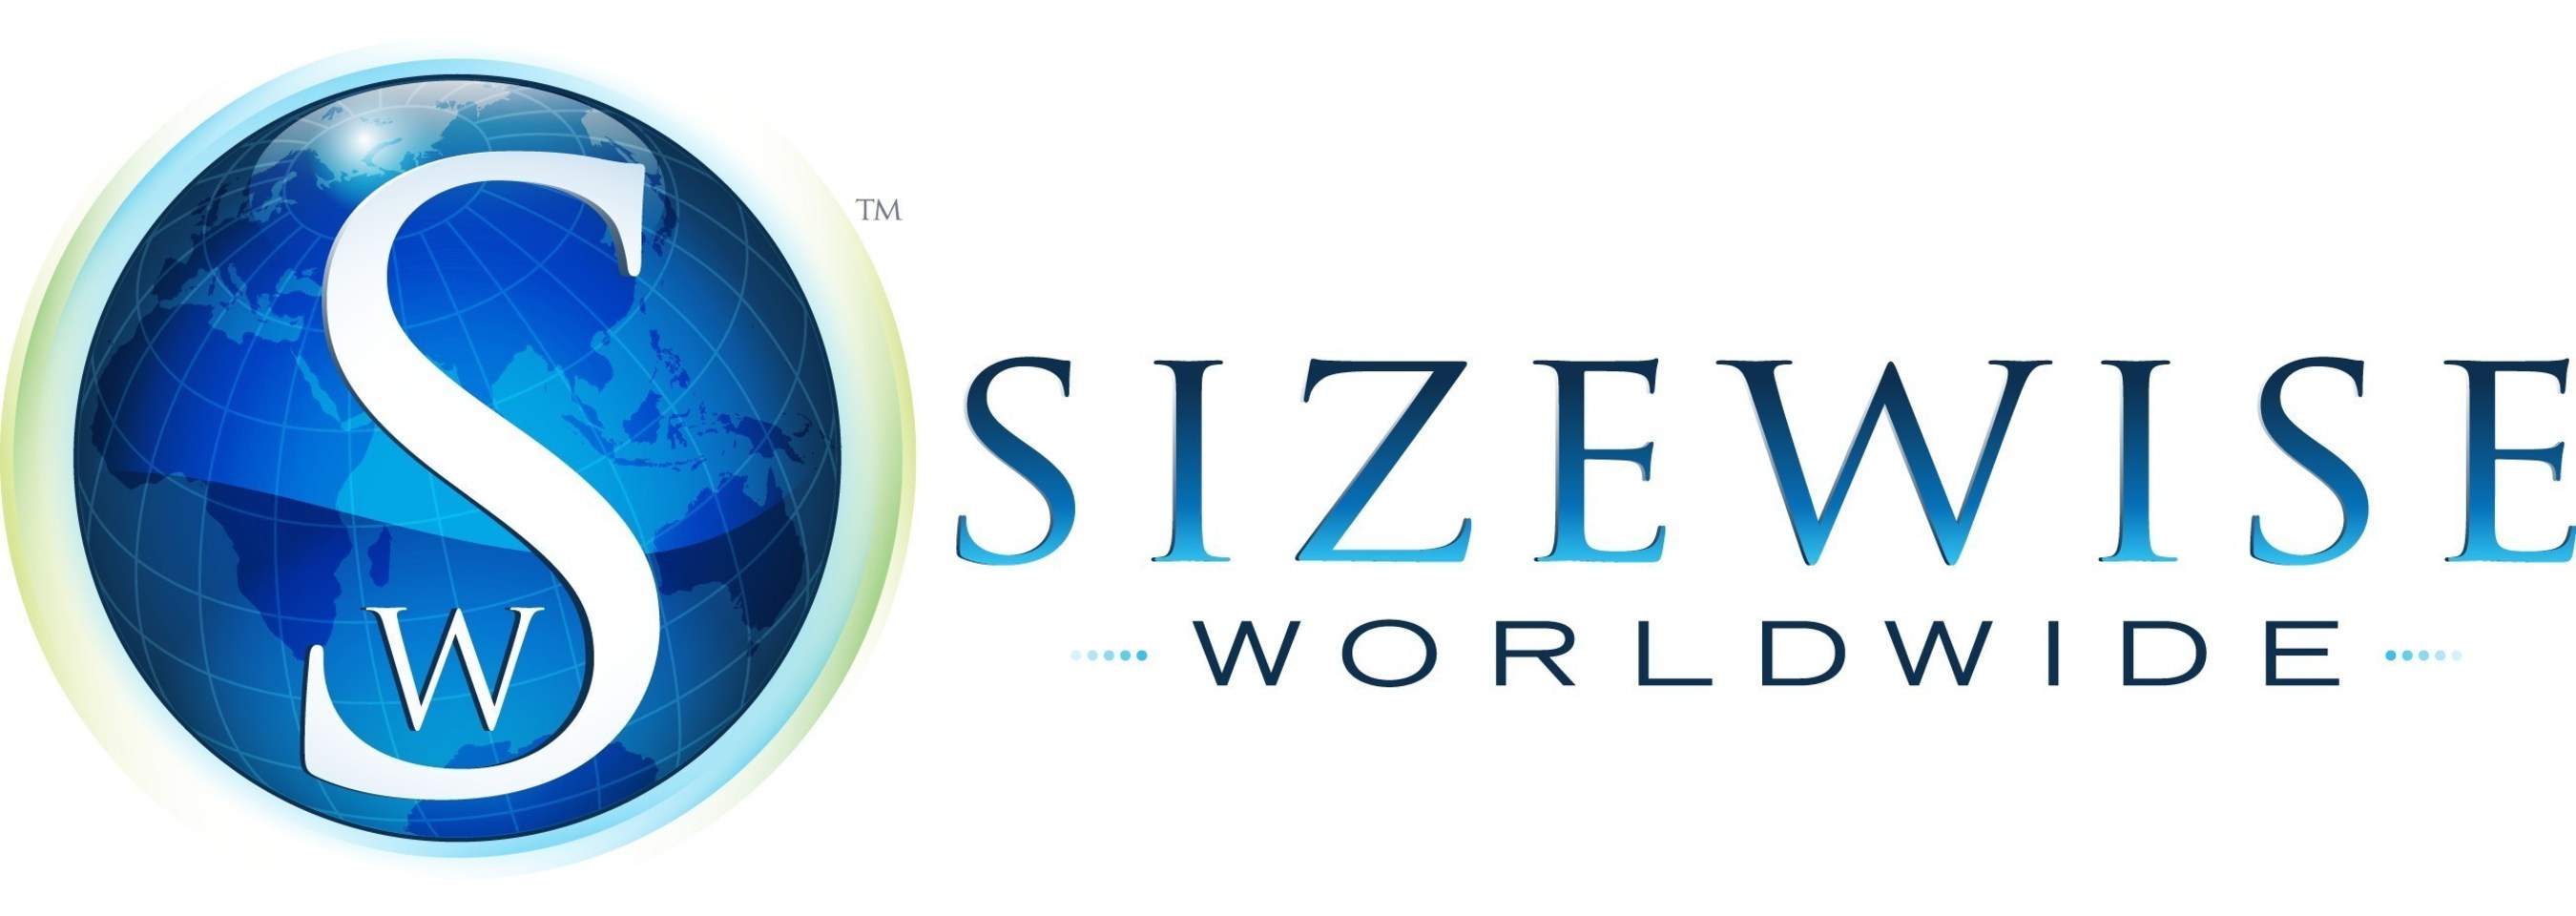 Sizewise Worldwide.